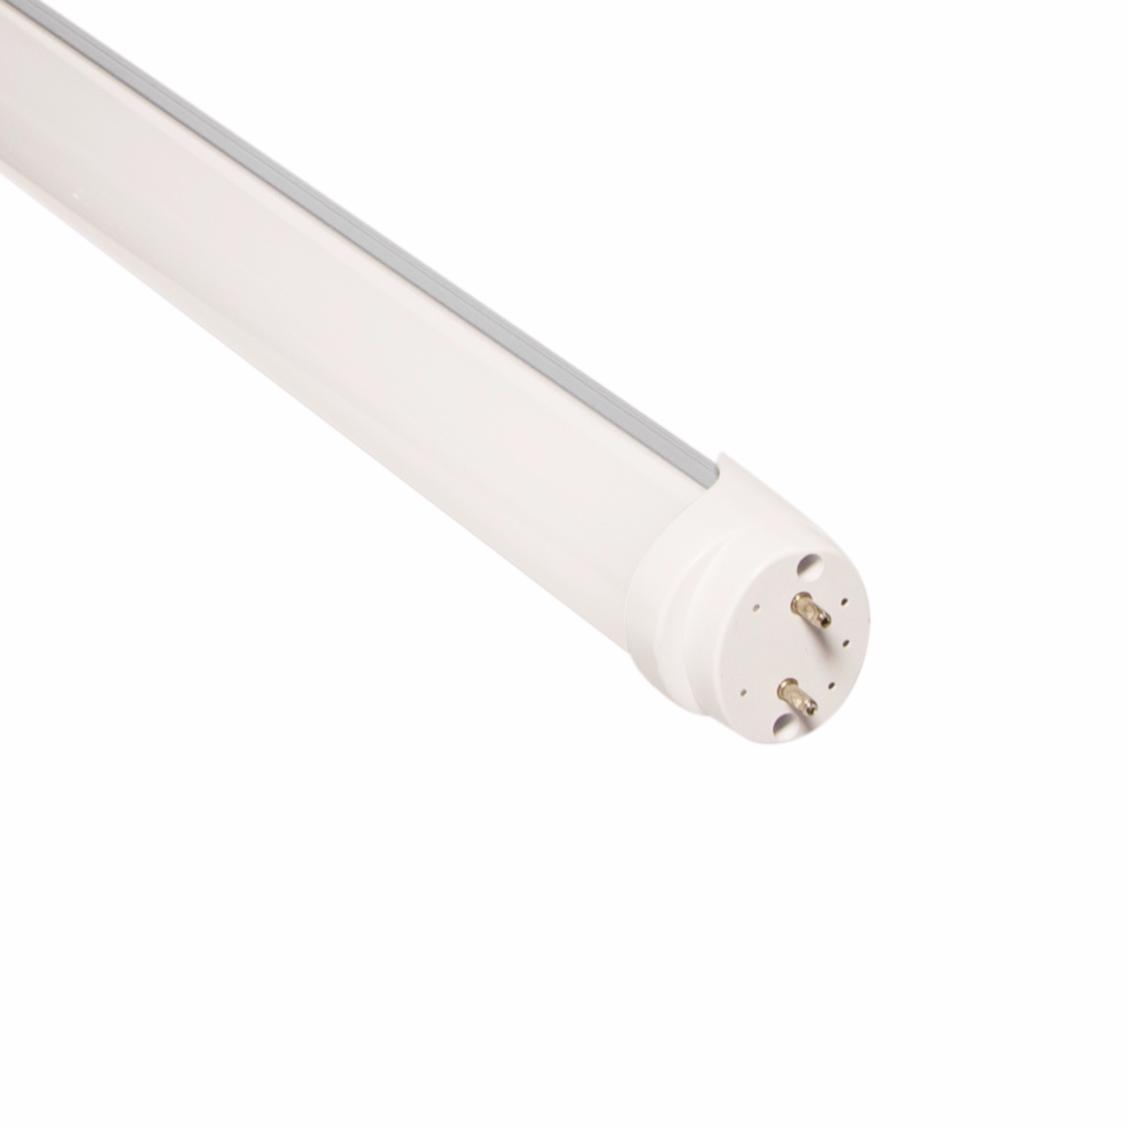 Tube Néon LED 120cm T8 20W (Pack de 5) - Blanc Chaud 2300K - 3500K - SILAMP